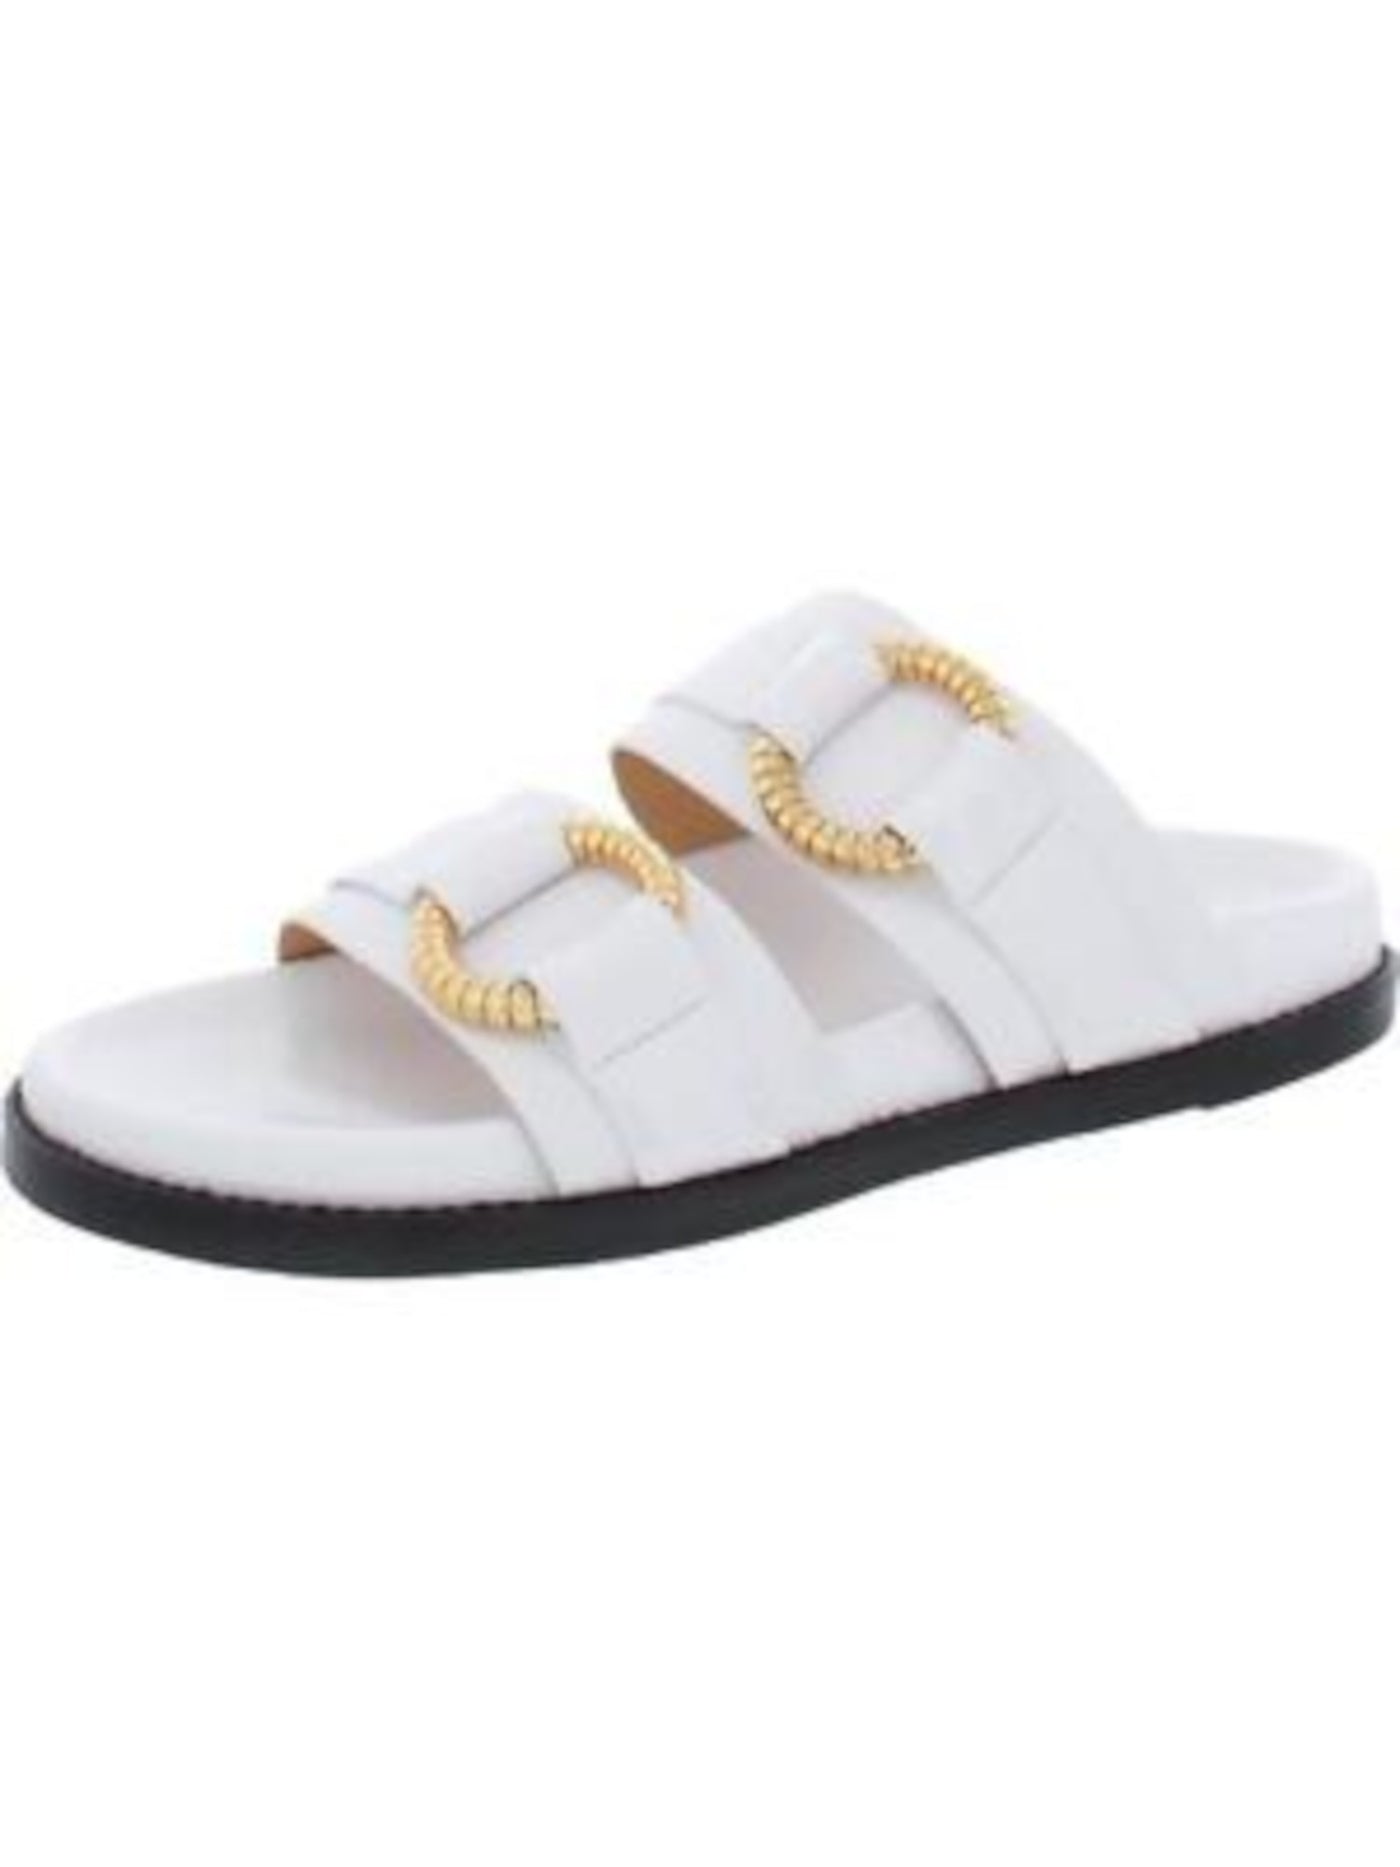 AQUA Womens White Ring Hardware Comfort Round Toe Platform Slip On Leather Slide Sandals Shoes 8.5 B